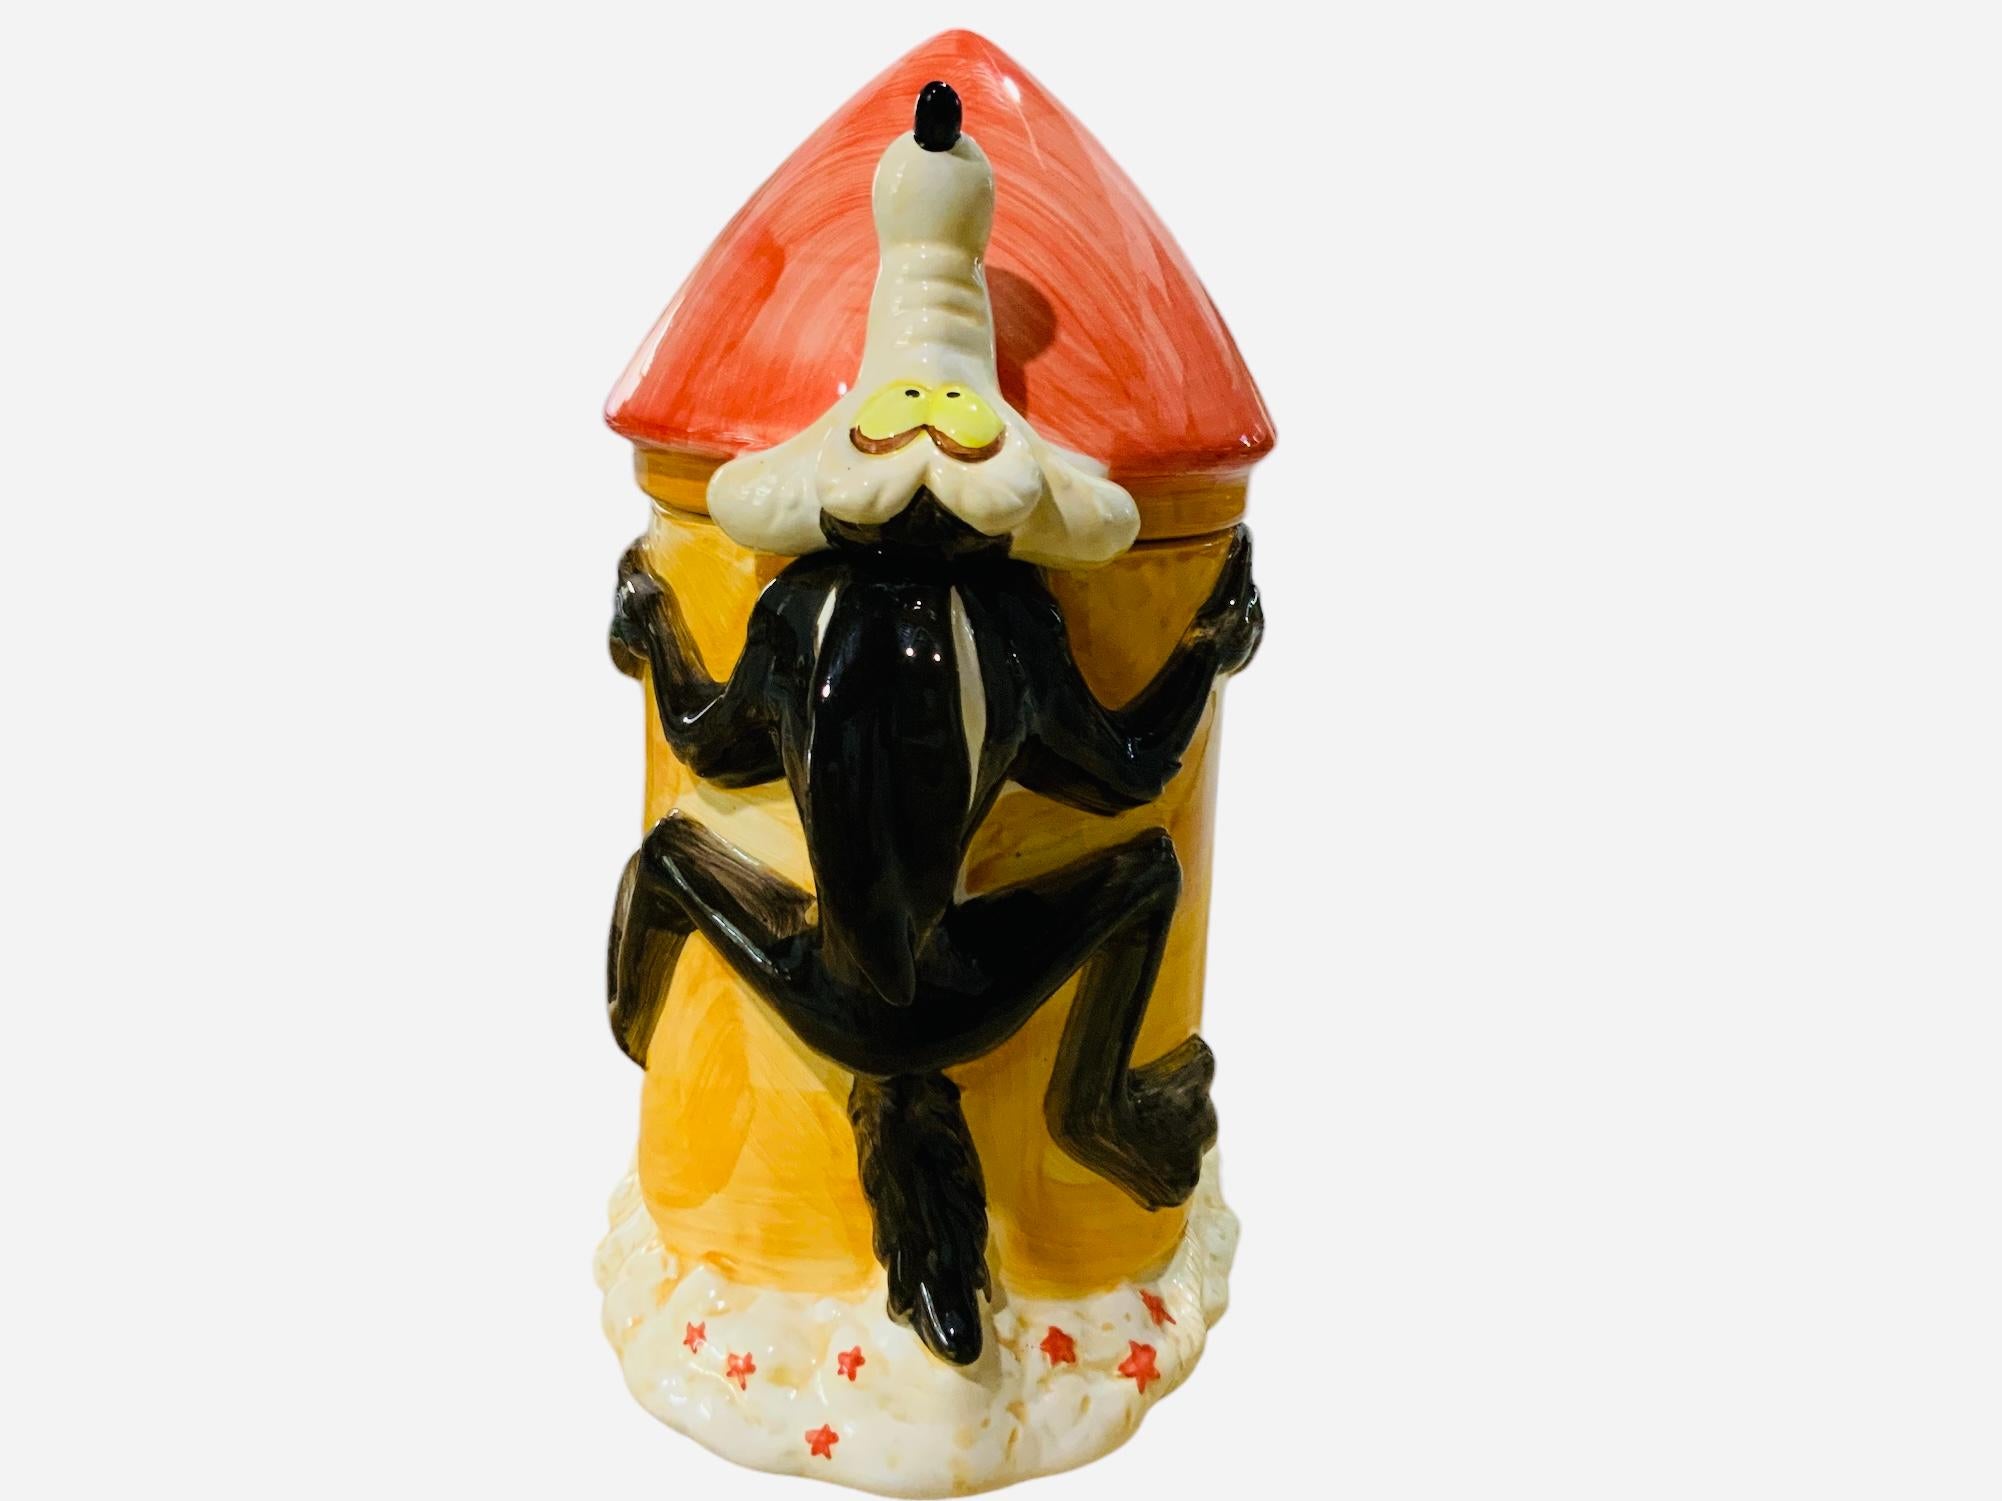 Dies ist ein Warner Bros, Looney Tunes Wile E. Coyote Rocket Cookie Jar. Es zeigt eine handbemalte Keramik-Keksdose in Form von Wile E. Coyote ACME Rocket. Unterhalb des Sockels ist TM & C gestempelt; Warner Bros, Taiwan.